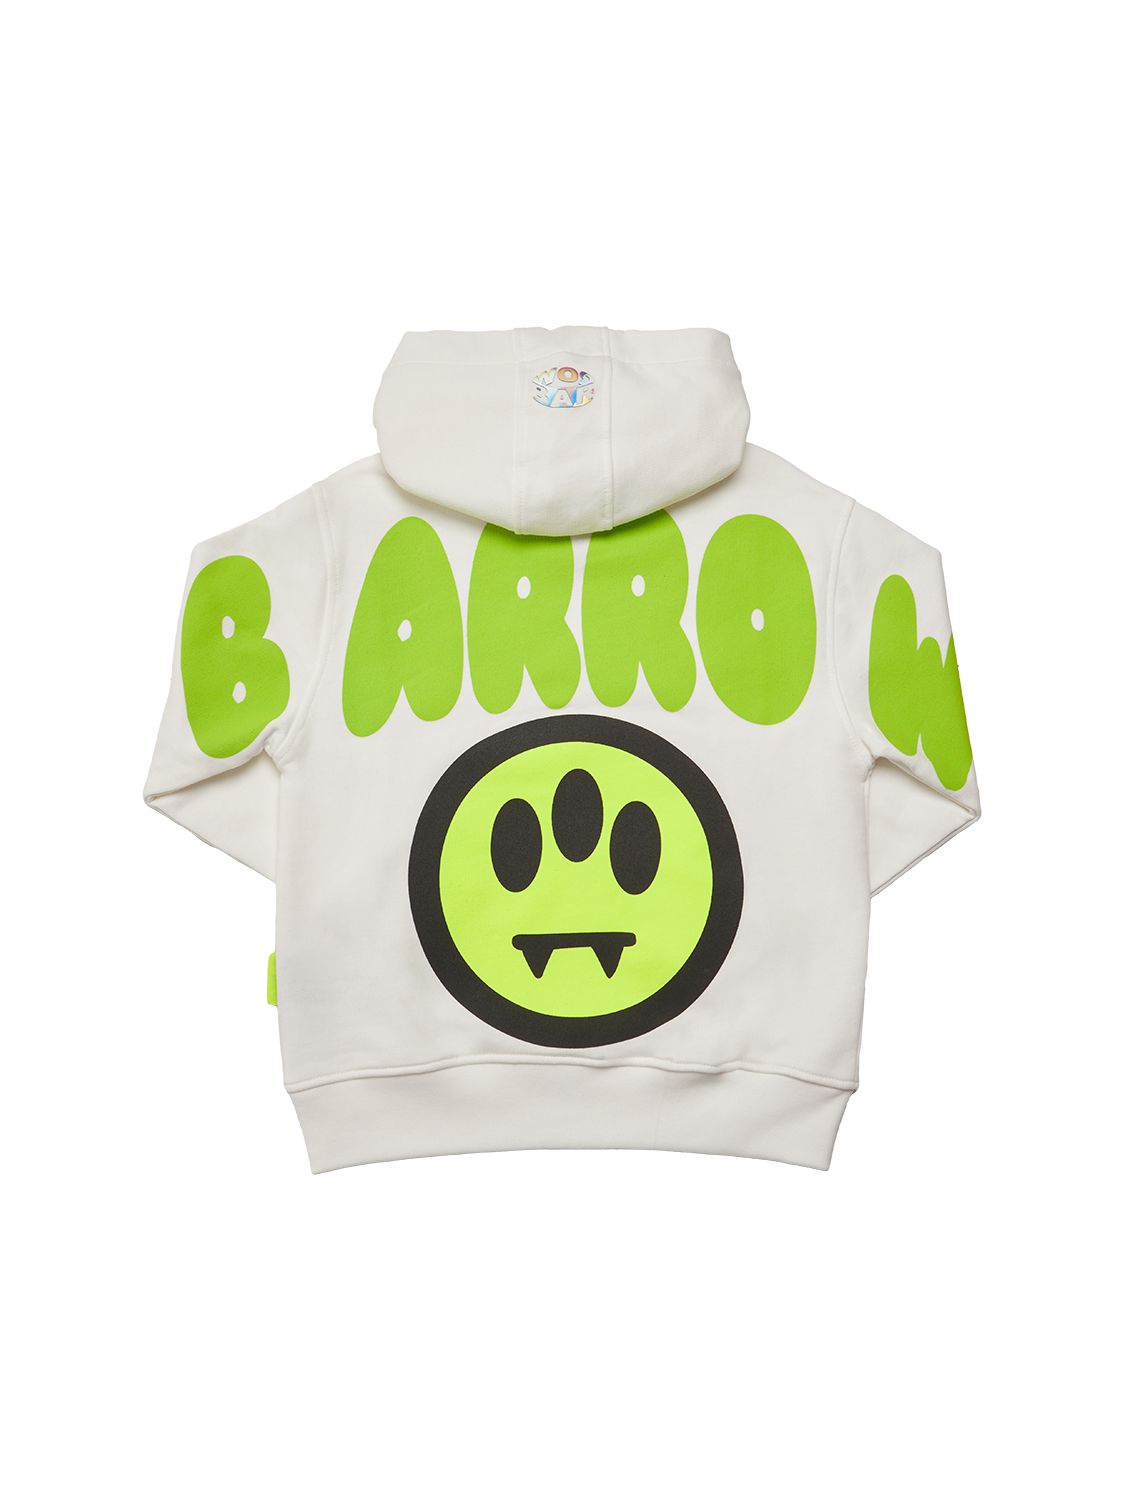 Shop Barrow Printed Cotton Sweatshirt Hoodie In Off-white